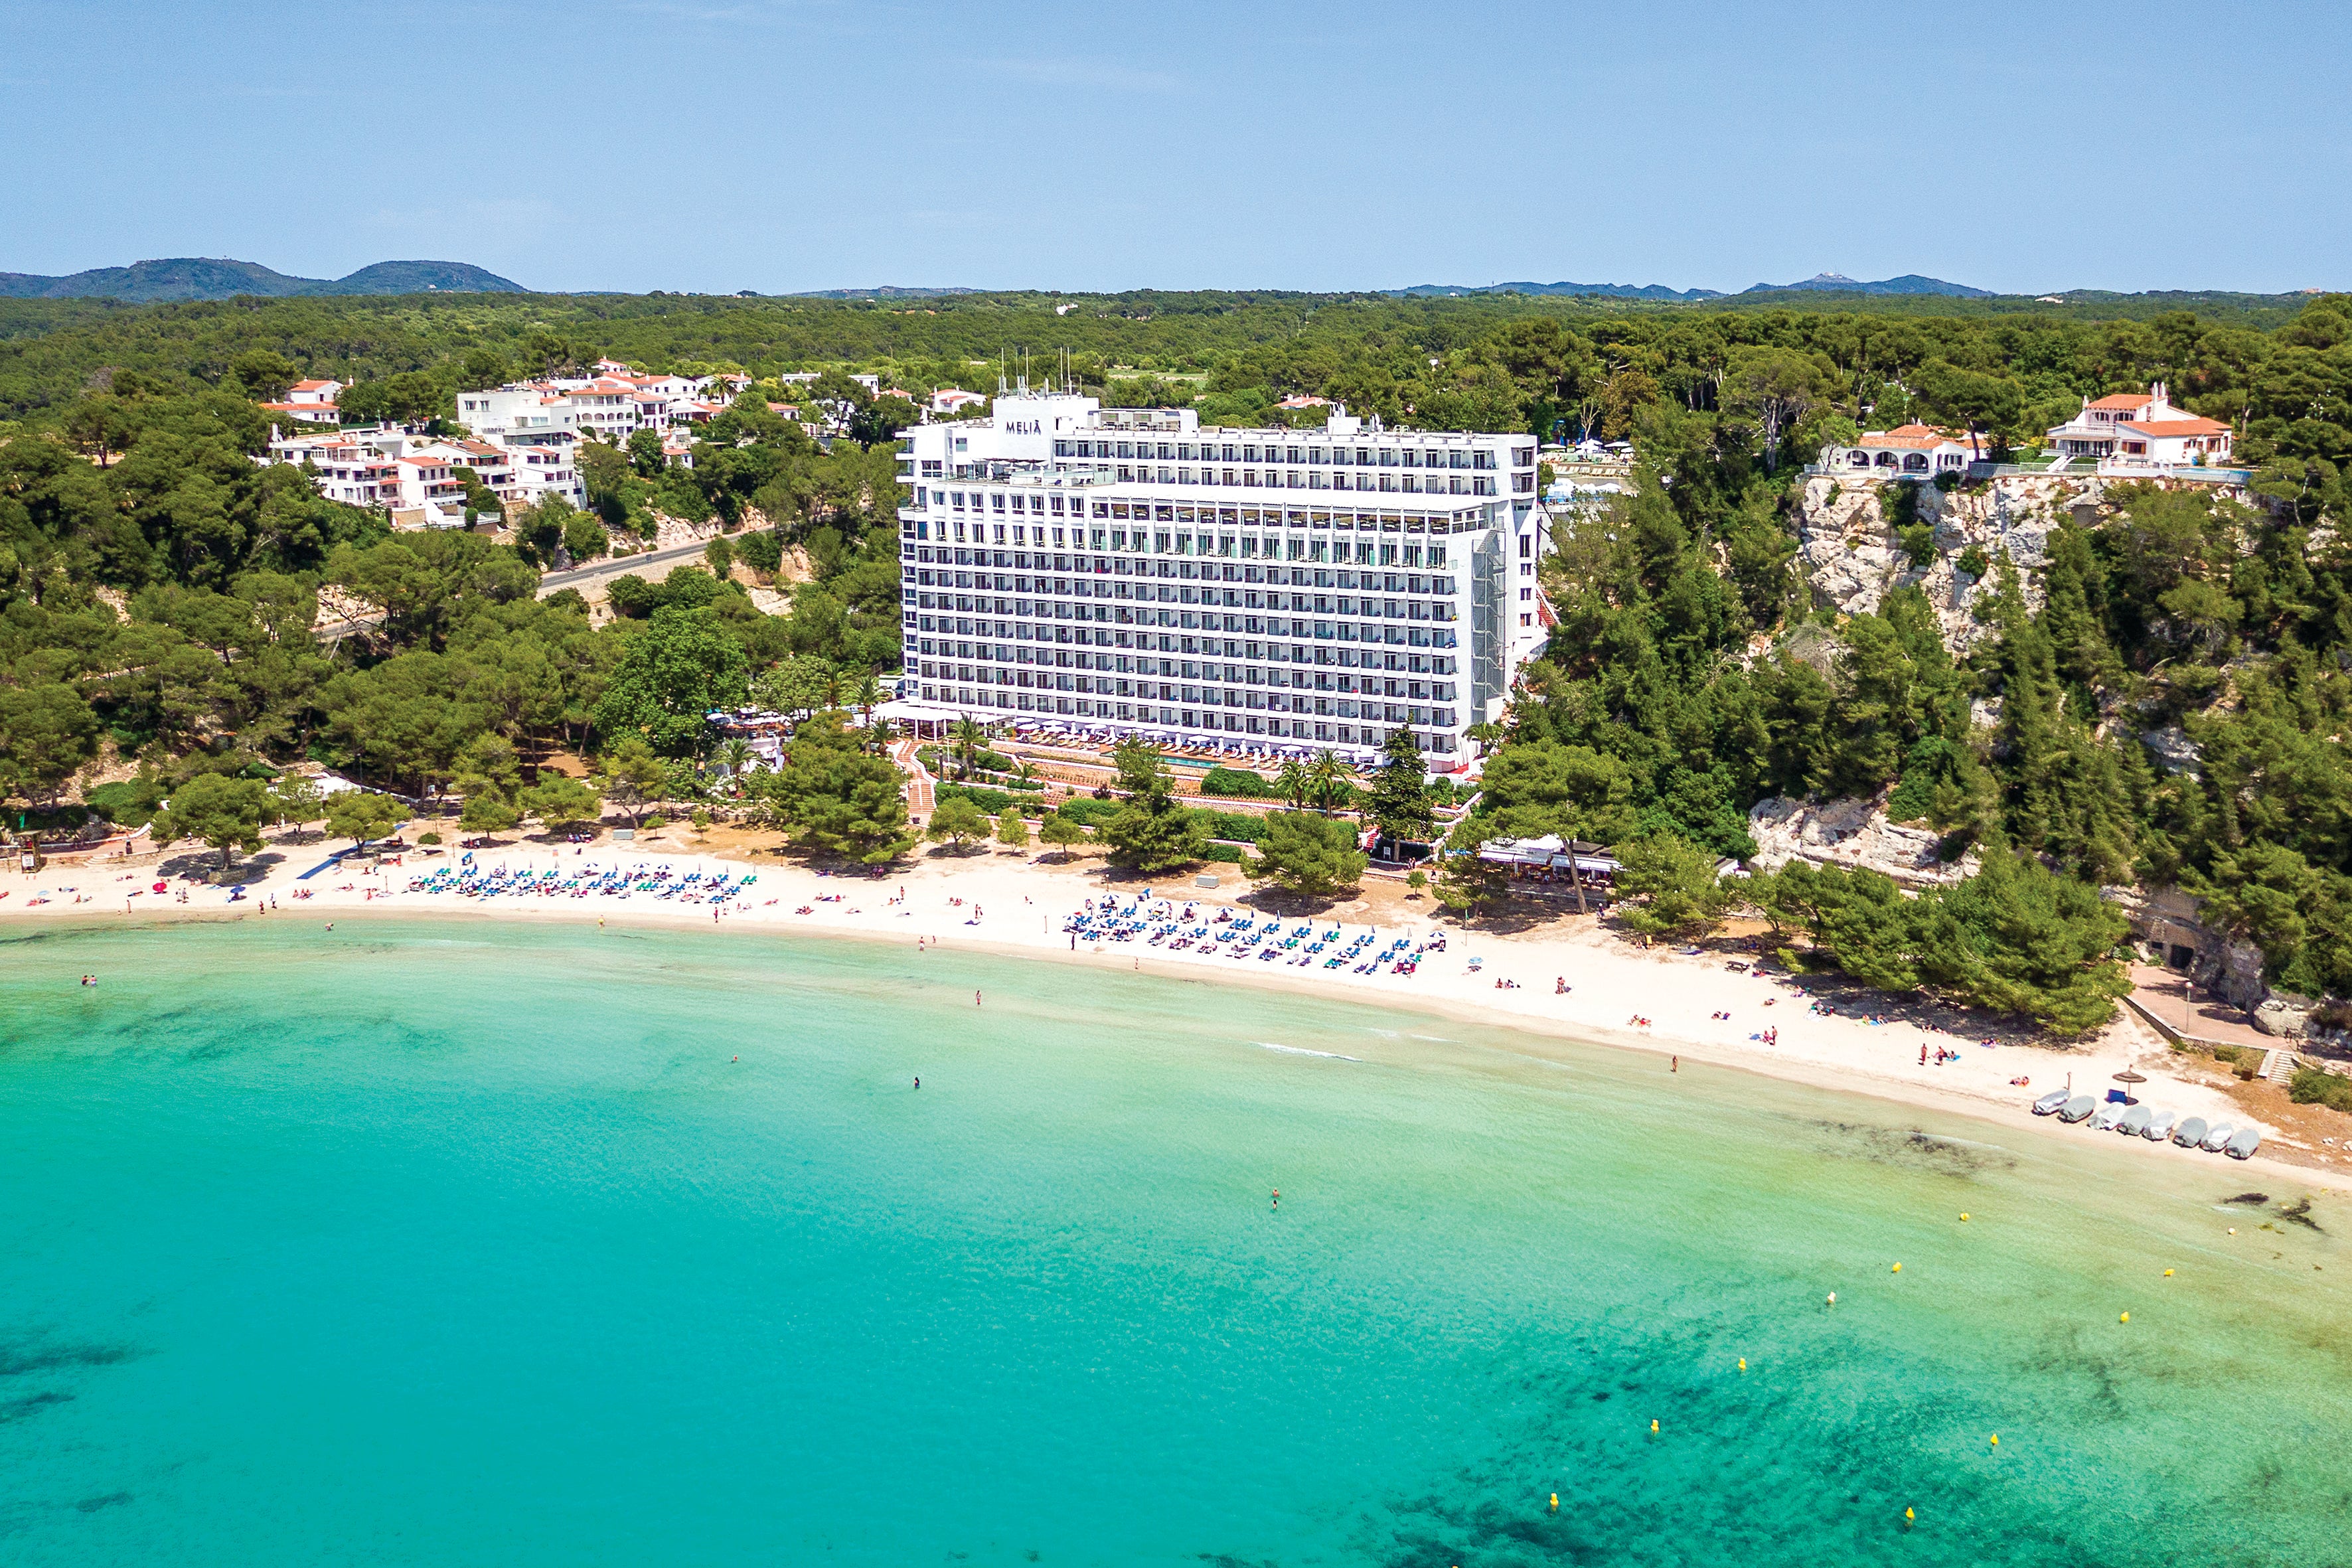 For the perfect beachy retreat, book into the Luxe Collection Melia Cala Galdana hotel